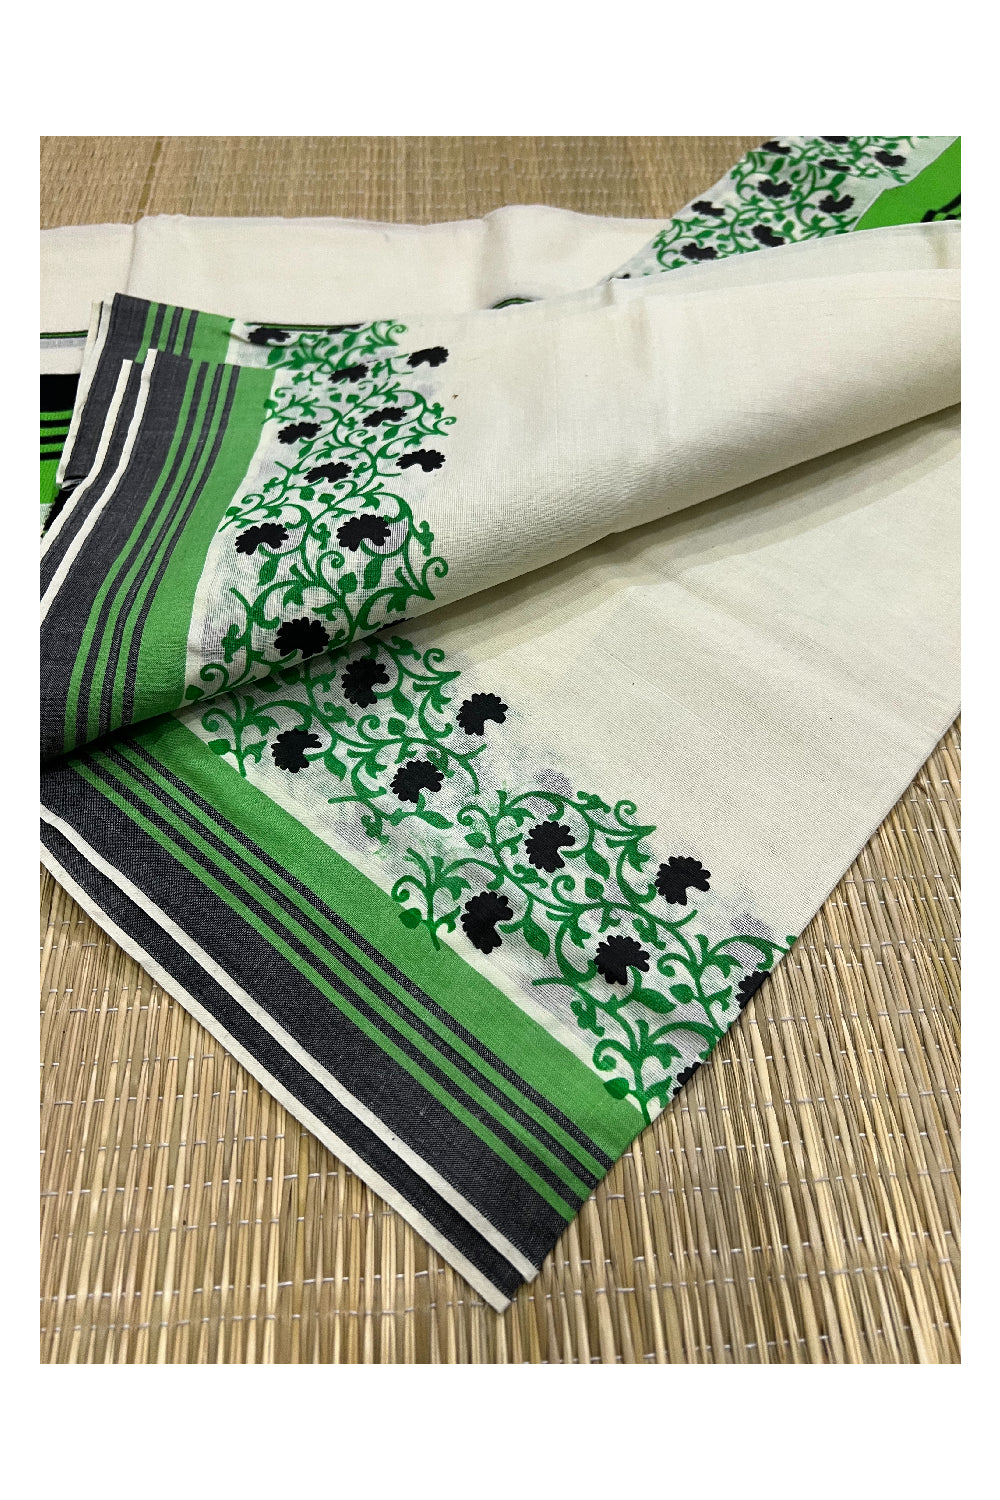 Kerala Cotton Set Mundu (Mundum Neriyathum) with Black Light Green Floral Block Prints on Border